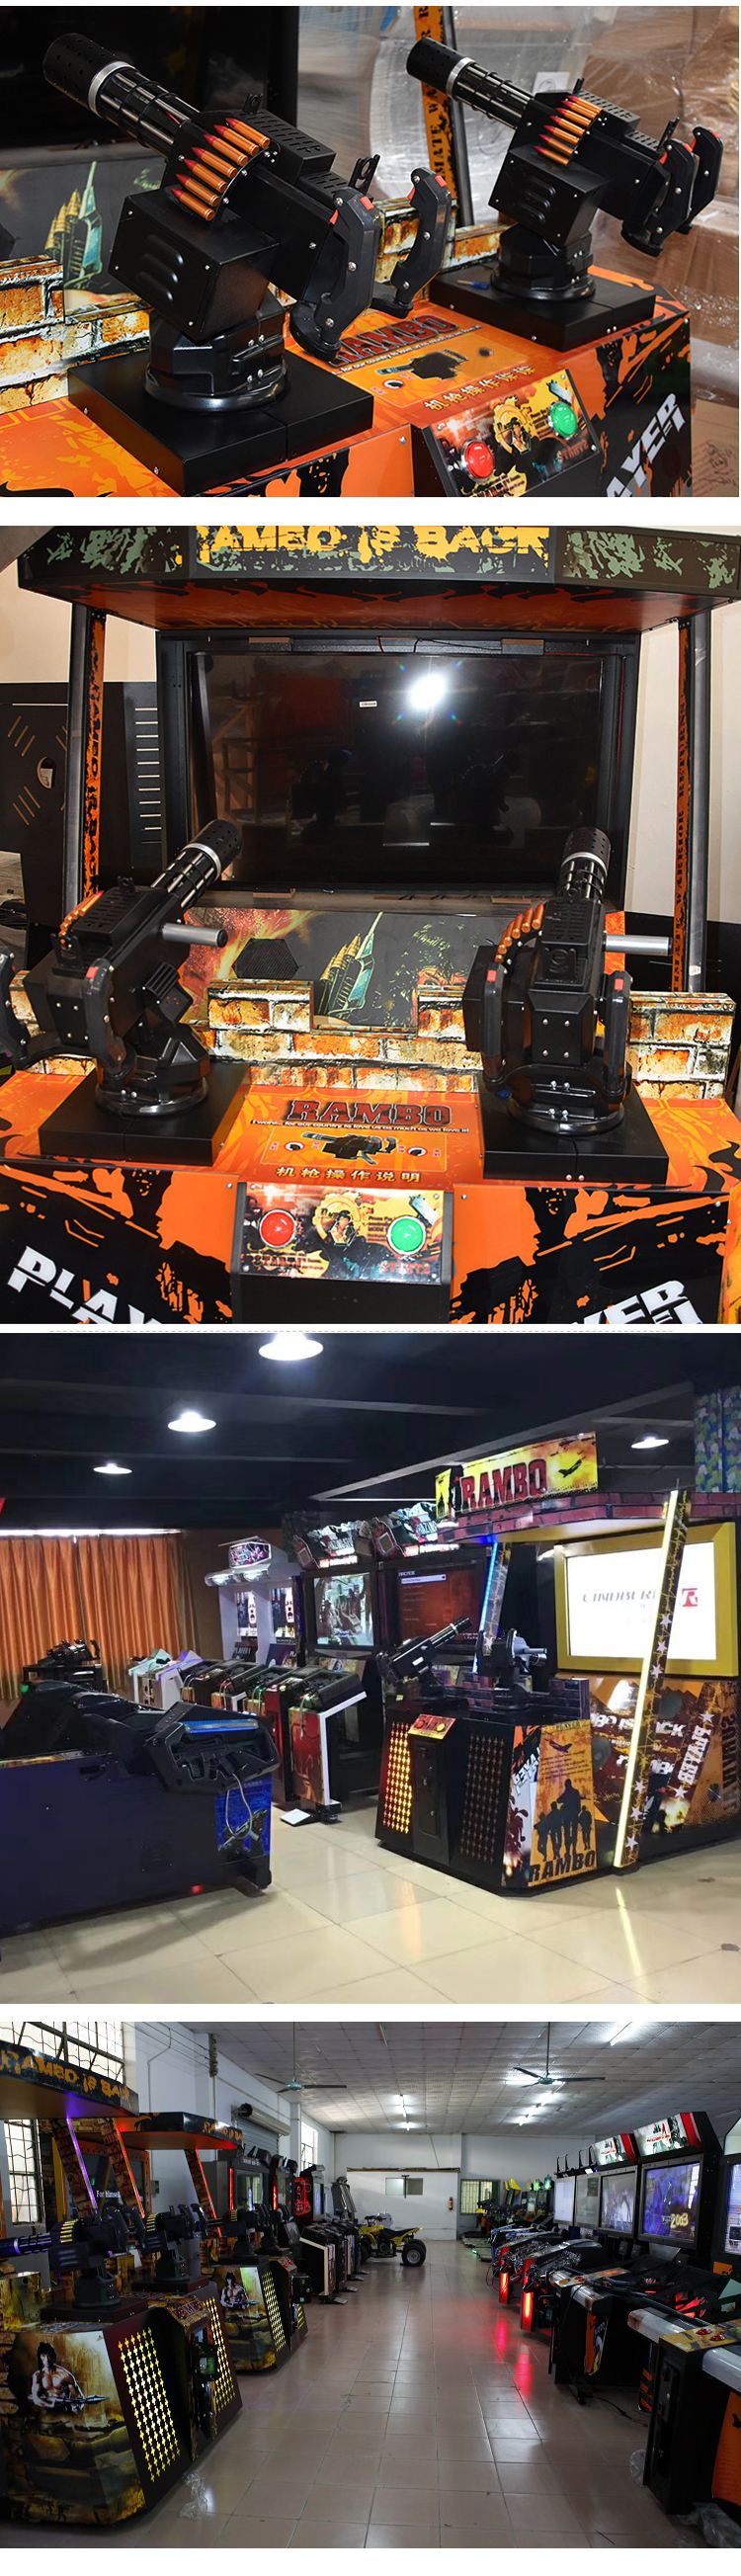 whole arcade games machines  simulator Rambo shooting games machine for 2 players